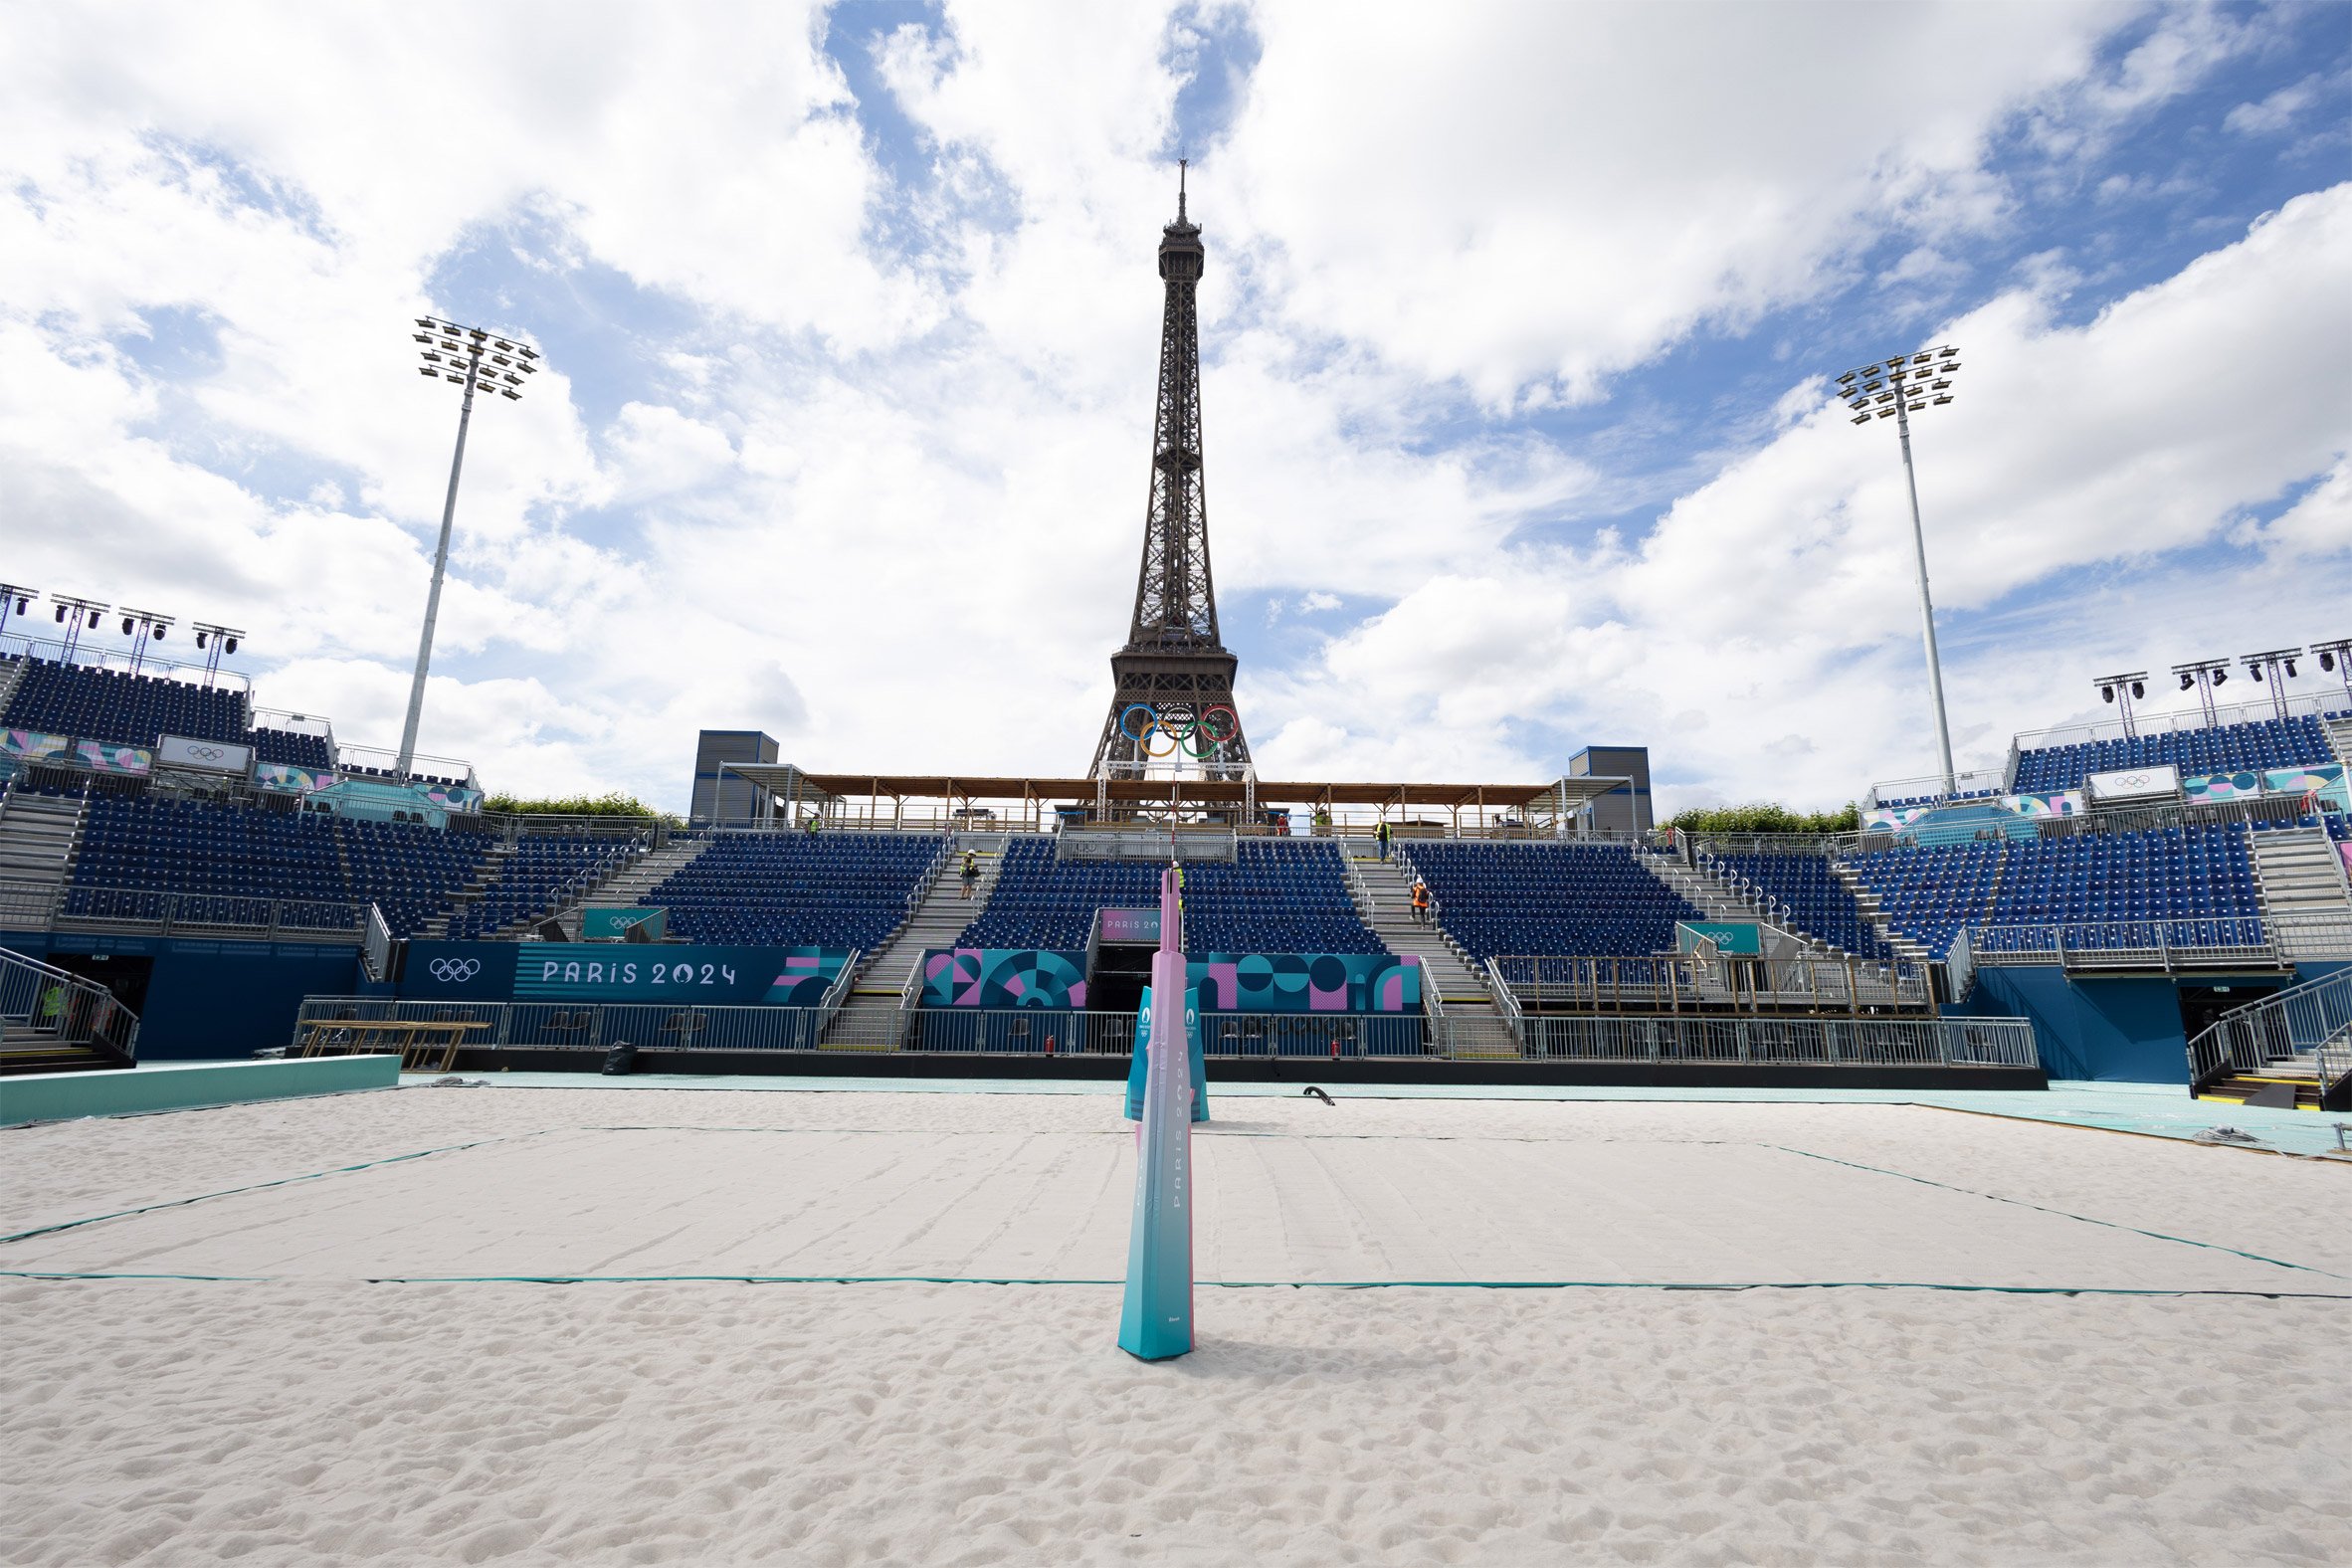 Eiffel Tower Stadium for Paris 2024 Olympics